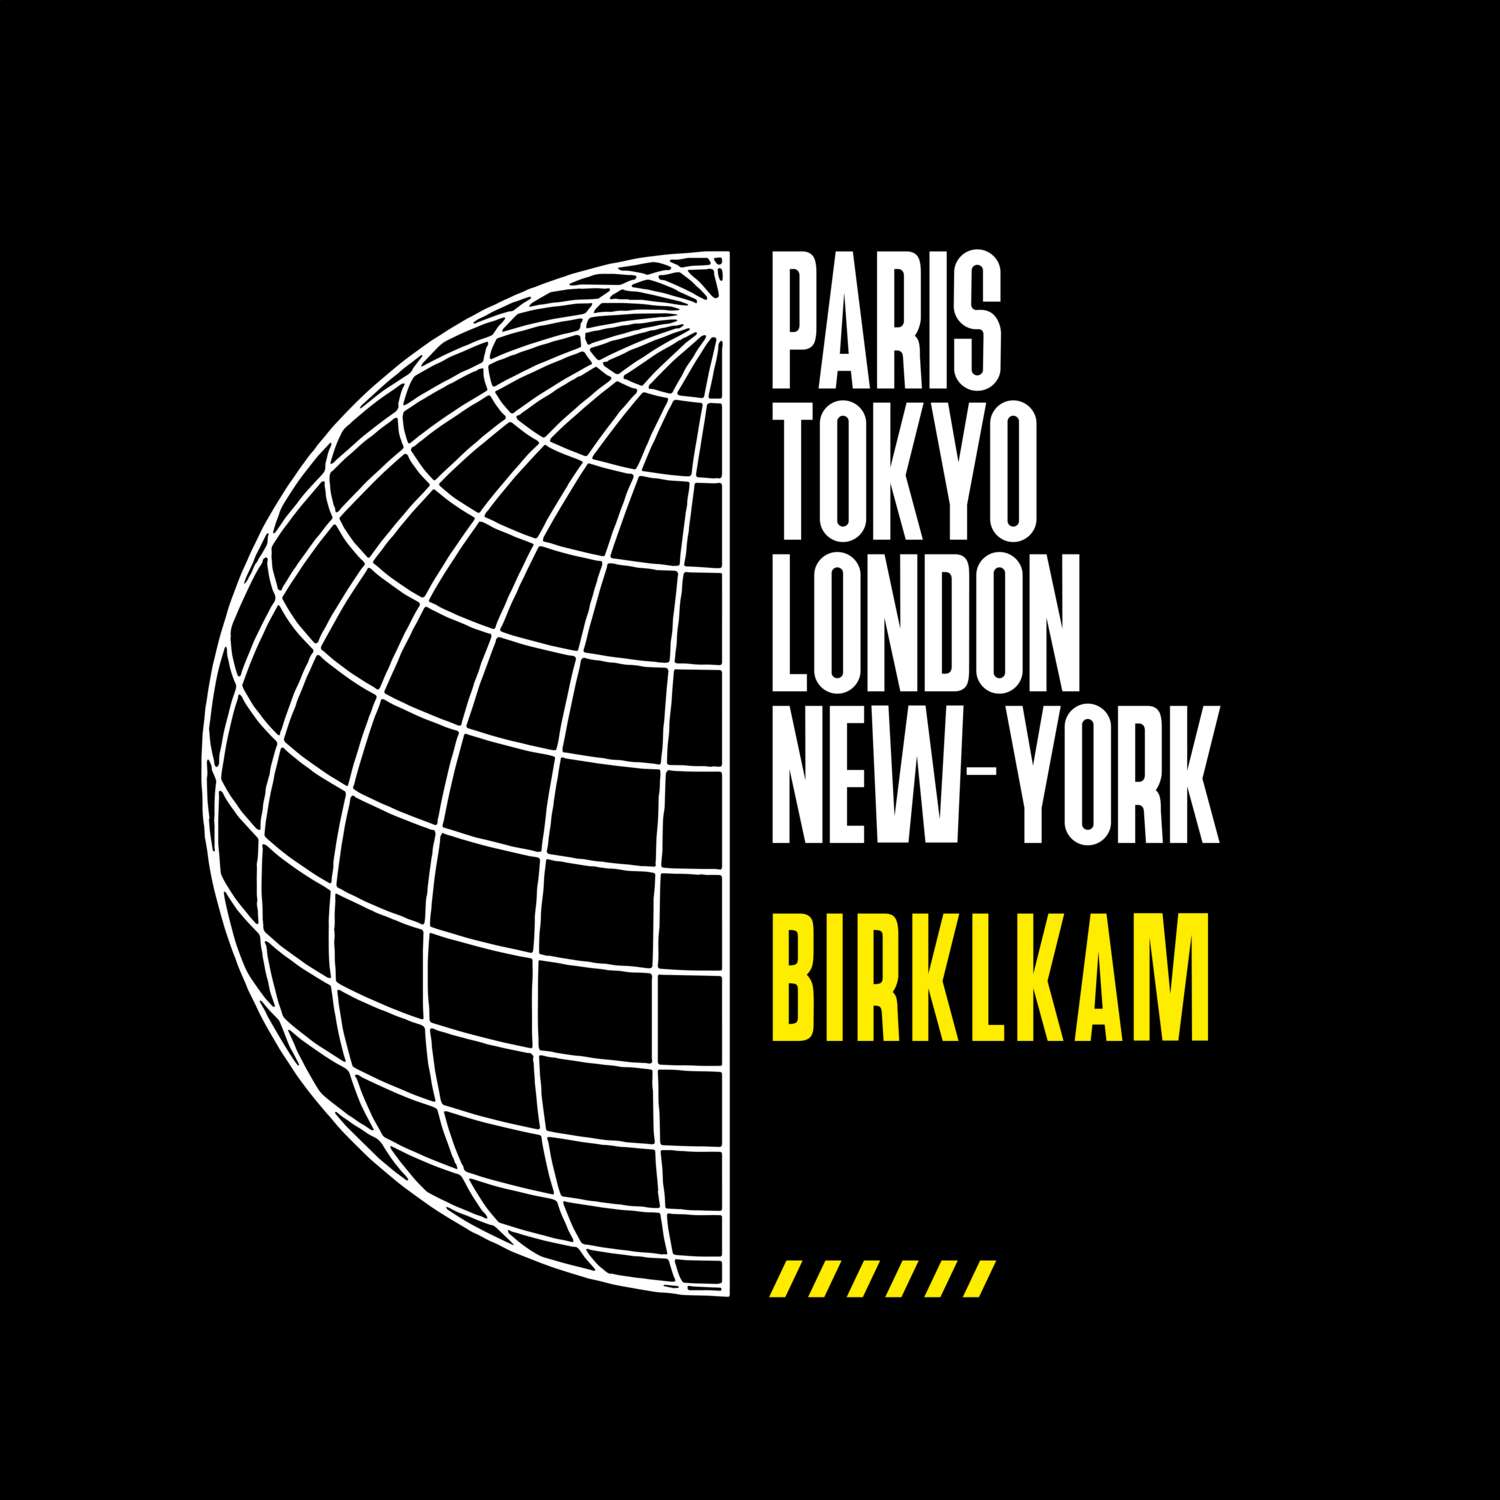 Birklkam T-Shirt »Paris Tokyo London«